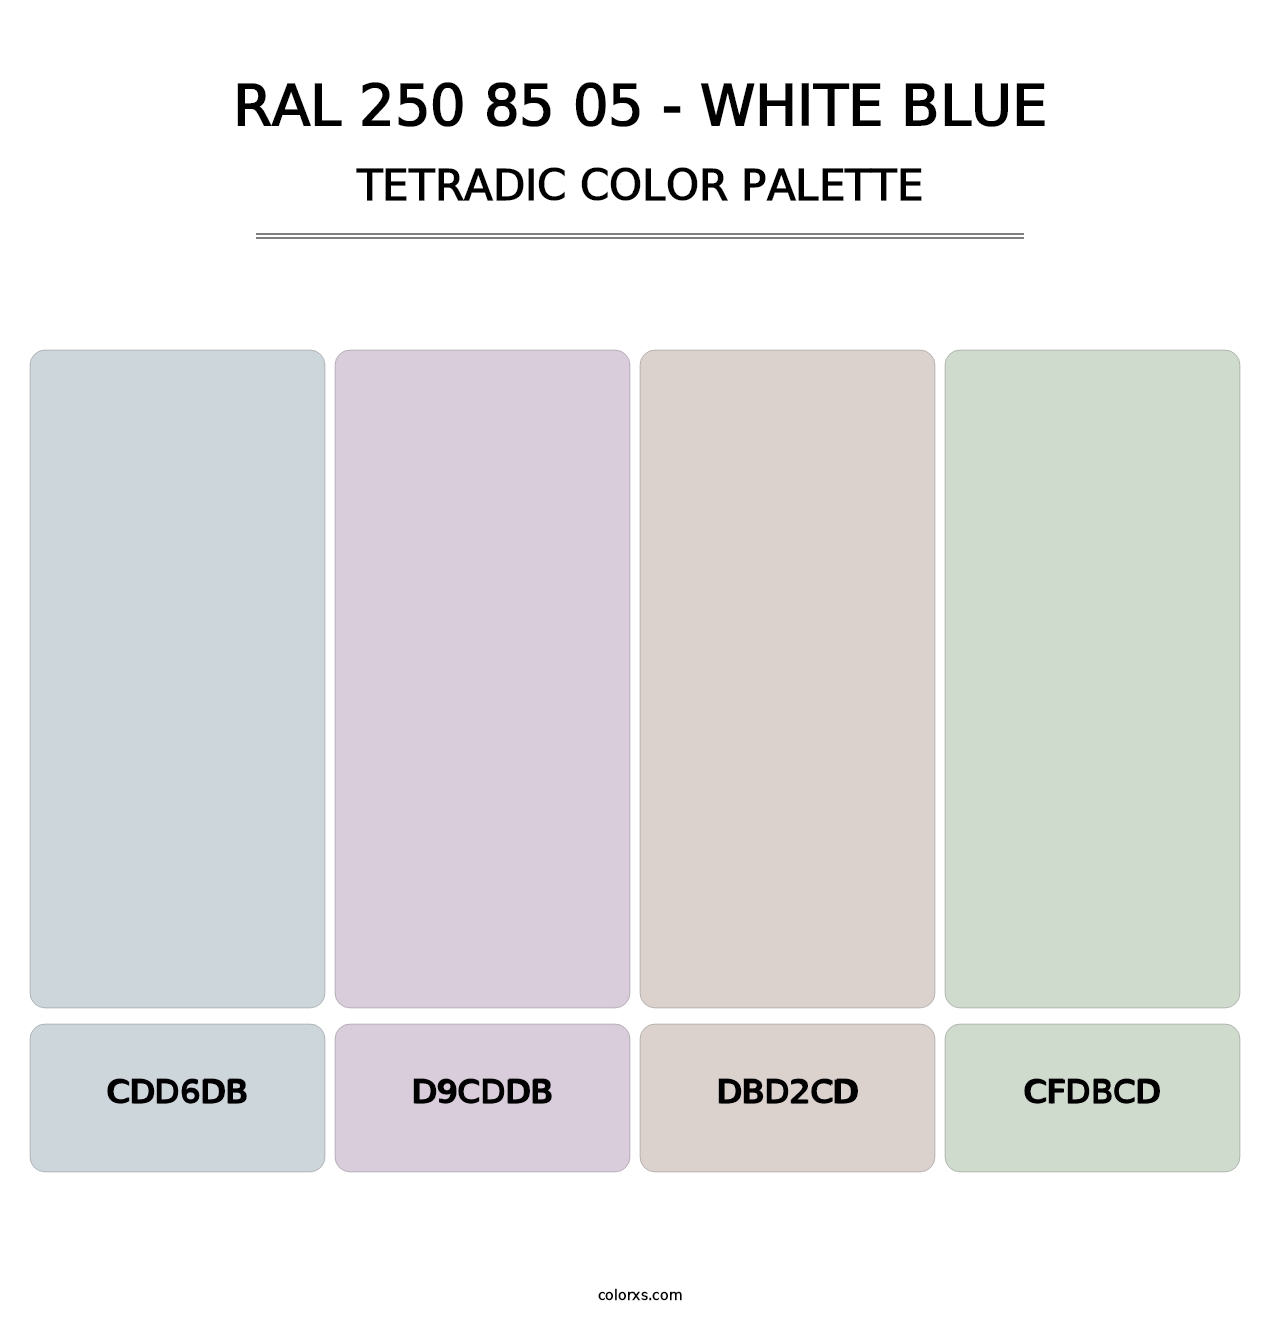 RAL 250 85 05 - White Blue - Tetradic Color Palette